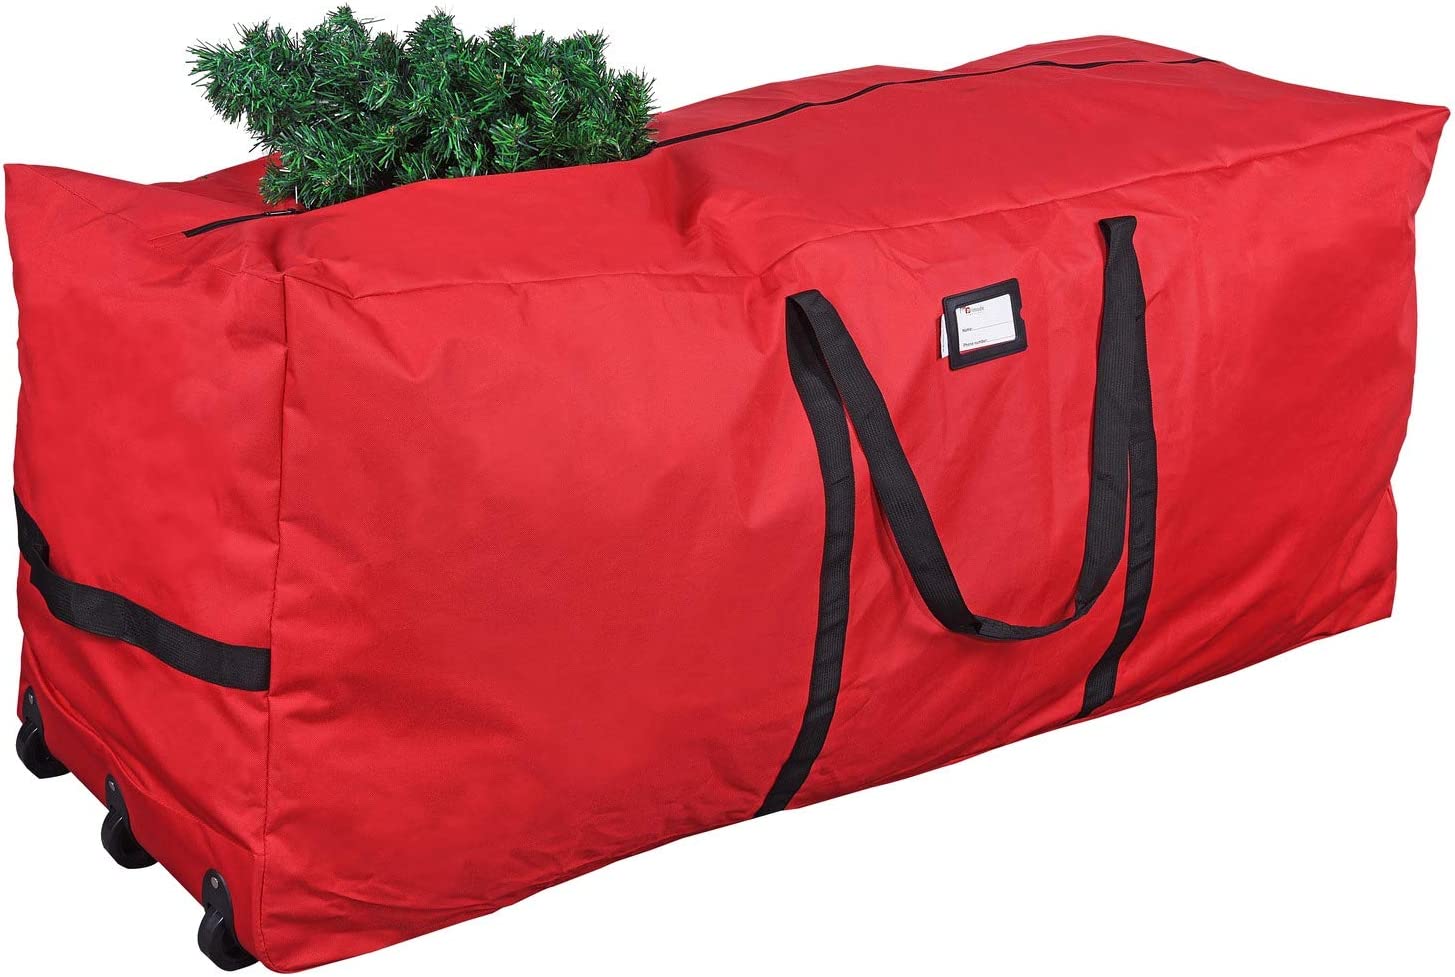  9. ProPik Holiday Christmas Tree Storage Bags 